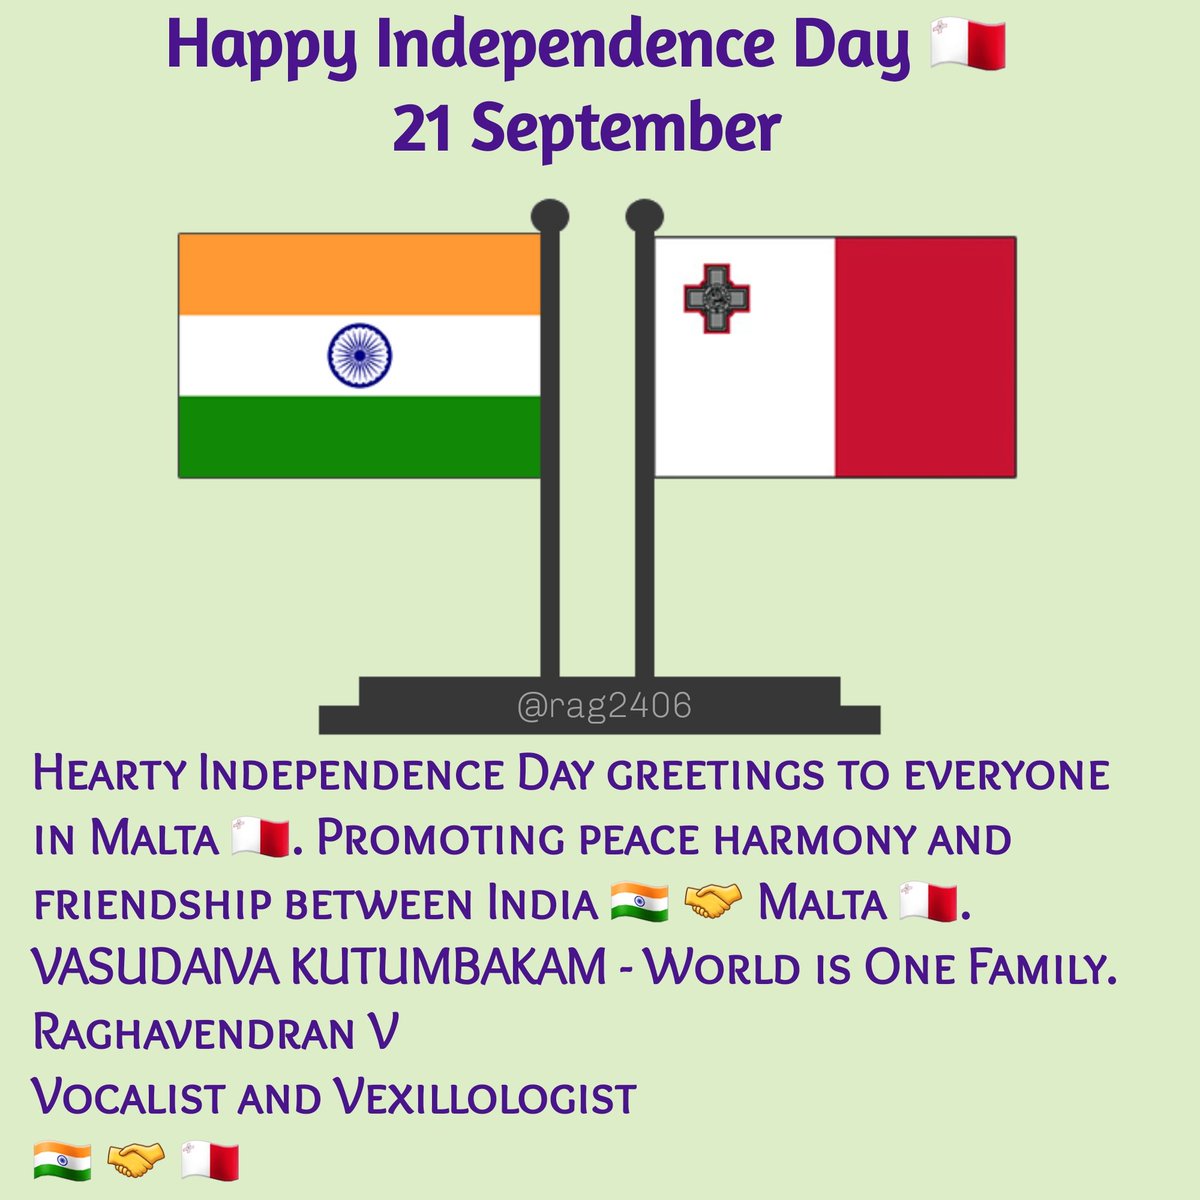 Happy Independence Day to everyone in Malta 🇲🇹. Vasudaiva Kutumbakam - World is One Family
🇮🇳🤝🇲🇹
#Malta #IndependenceDay
@rashtrapatibhvn @VPIndia @narendramodi @PMOIndia @DrSJaishankar @M_Lekhi @MaltaGov @presidentmt @MFETMalta @RobertAbela_MT @MinisterIanBorg @reubengauci1976